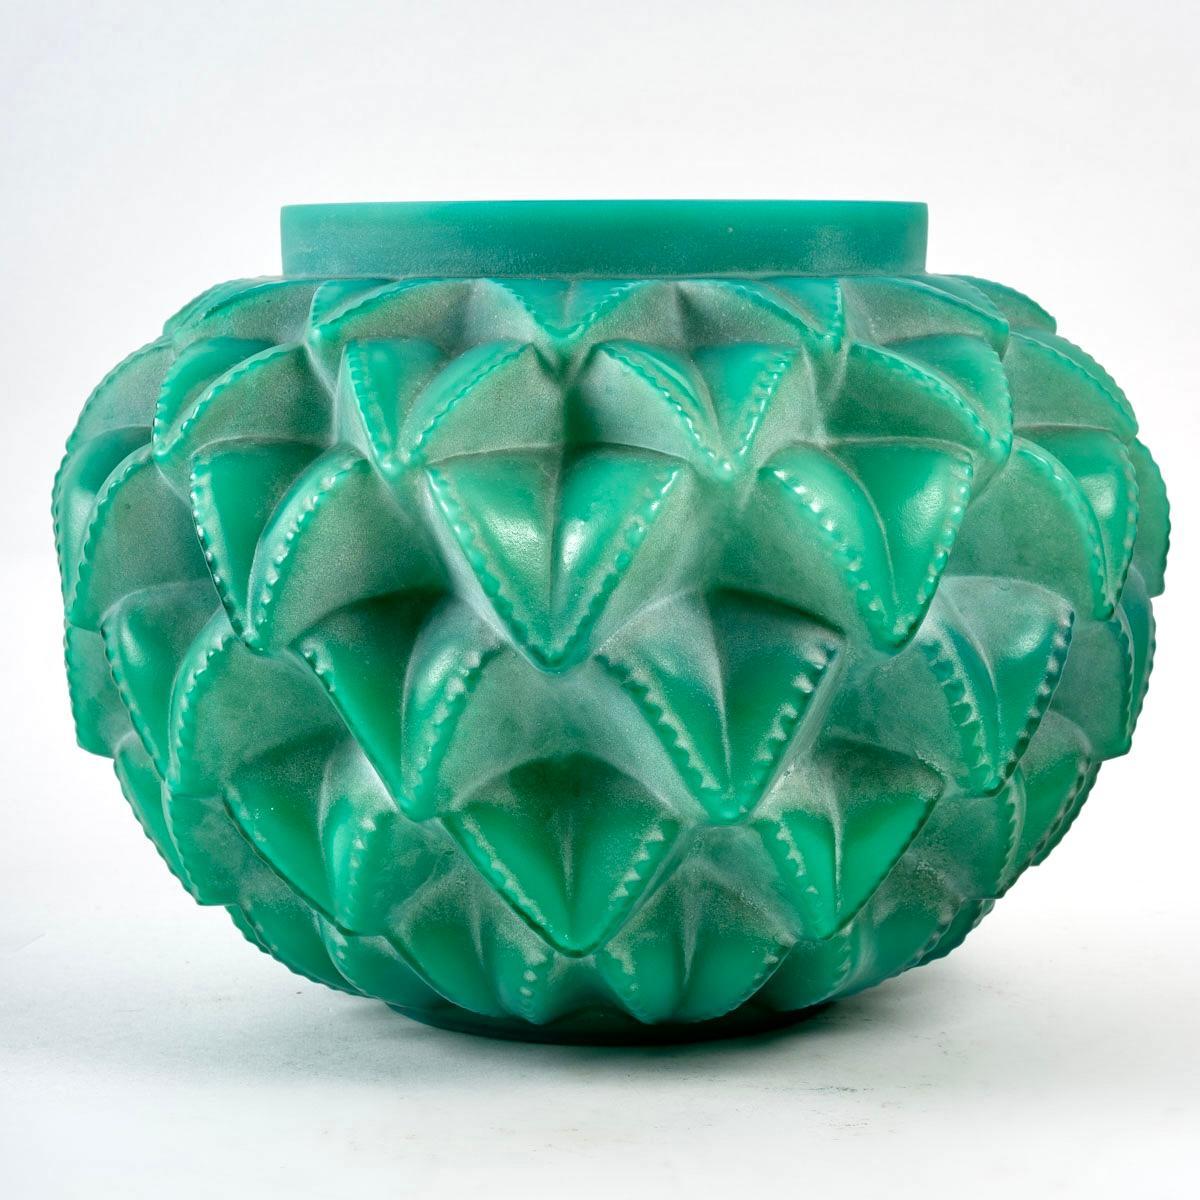 Molded 1929 Original René Lalique Languedoc Vase Cased Jade Green Glass - Cactus Leaves